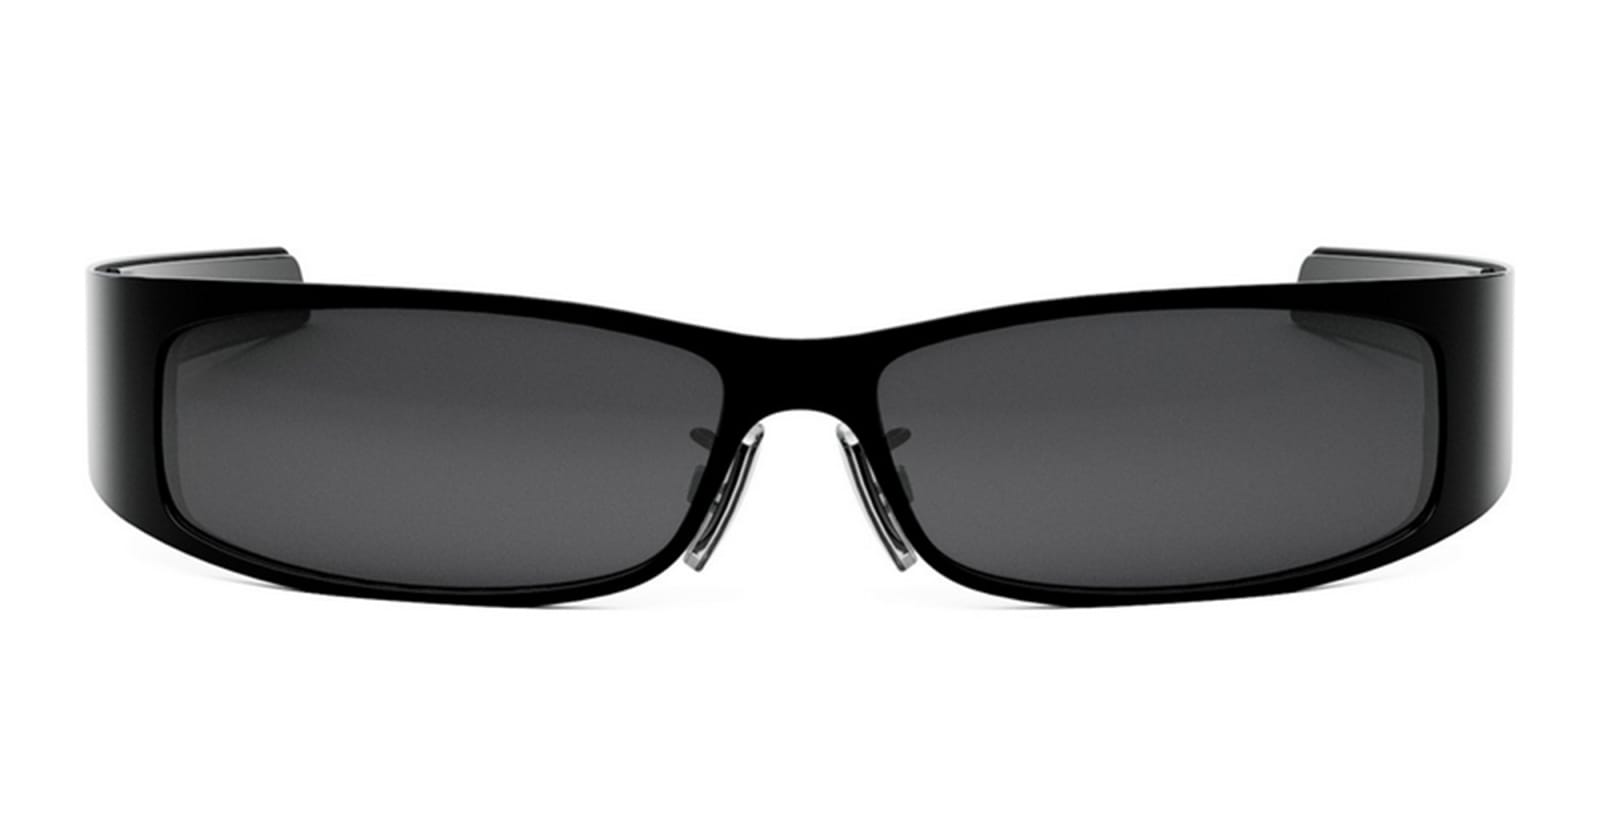 G-scape - Shiny Black Sunglasses